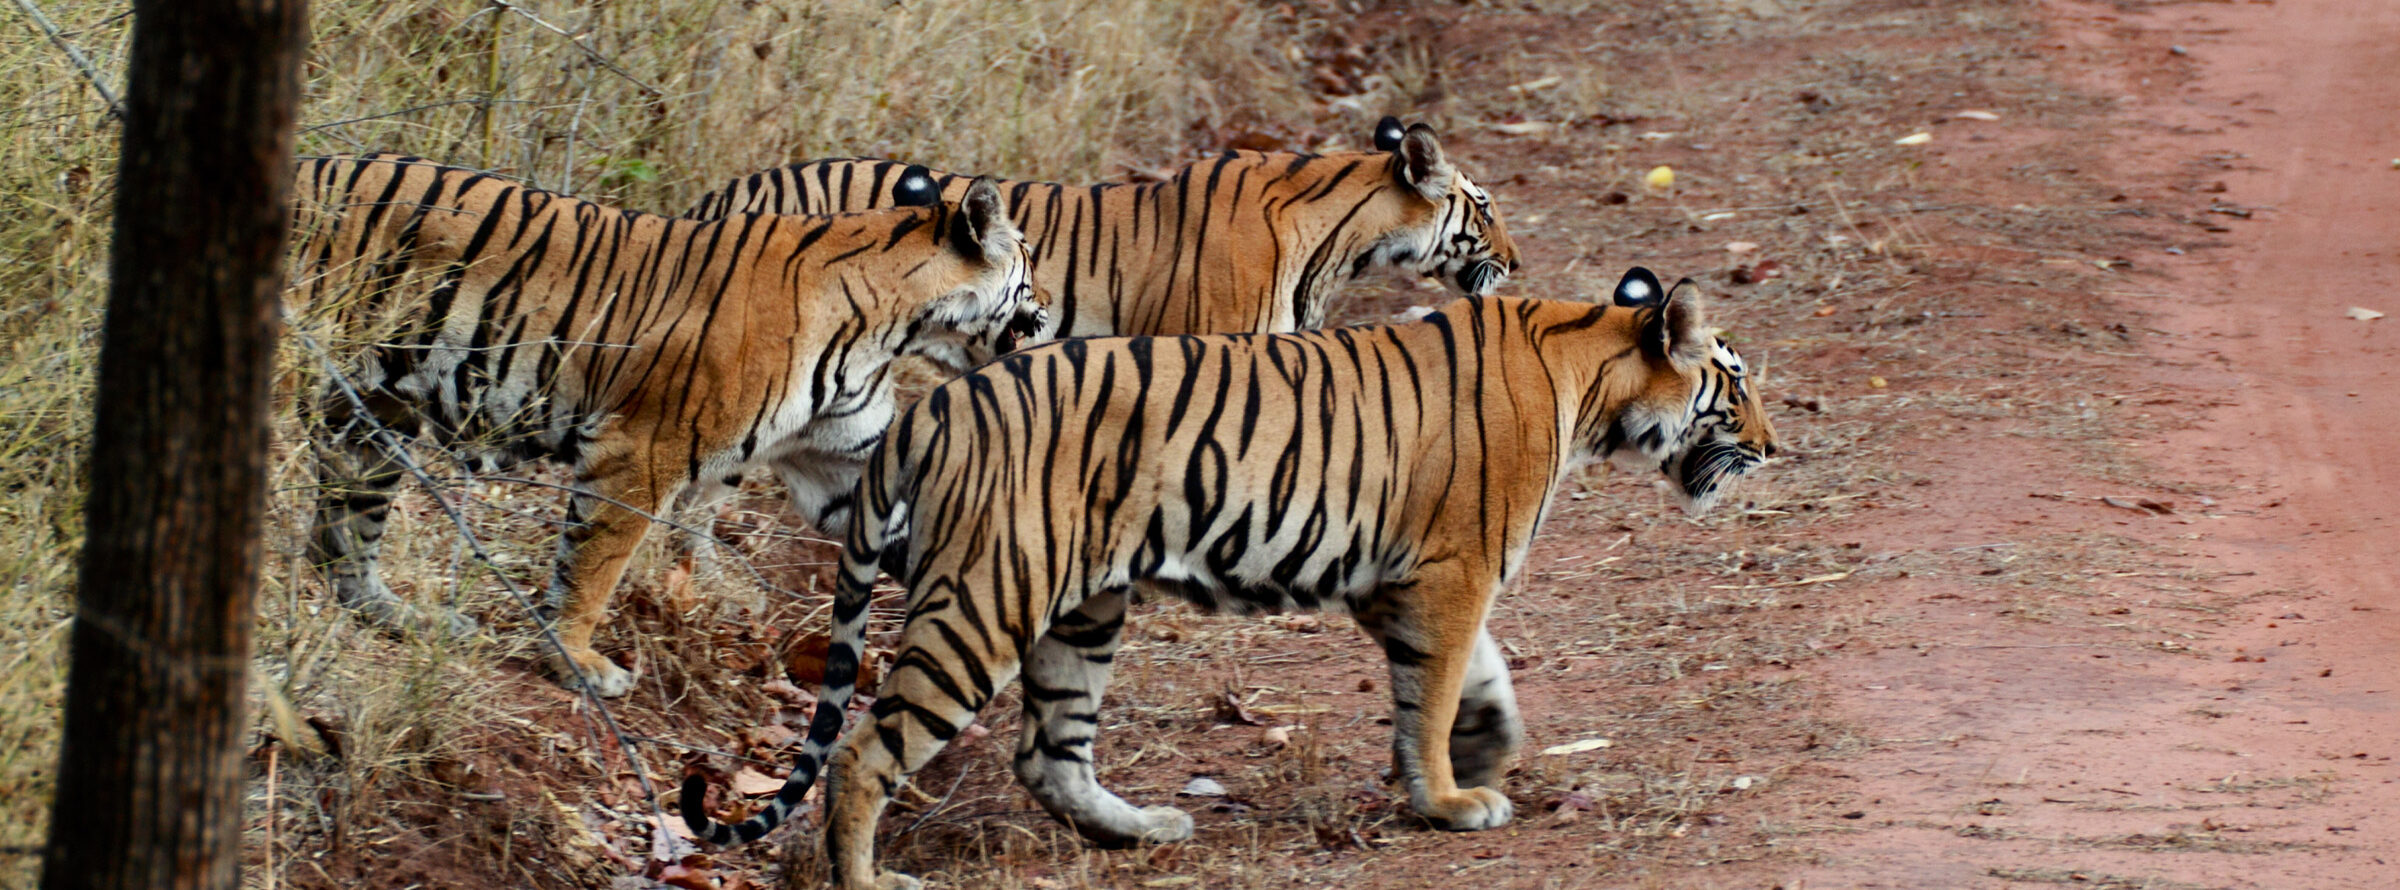 Royal Bengal tigers 